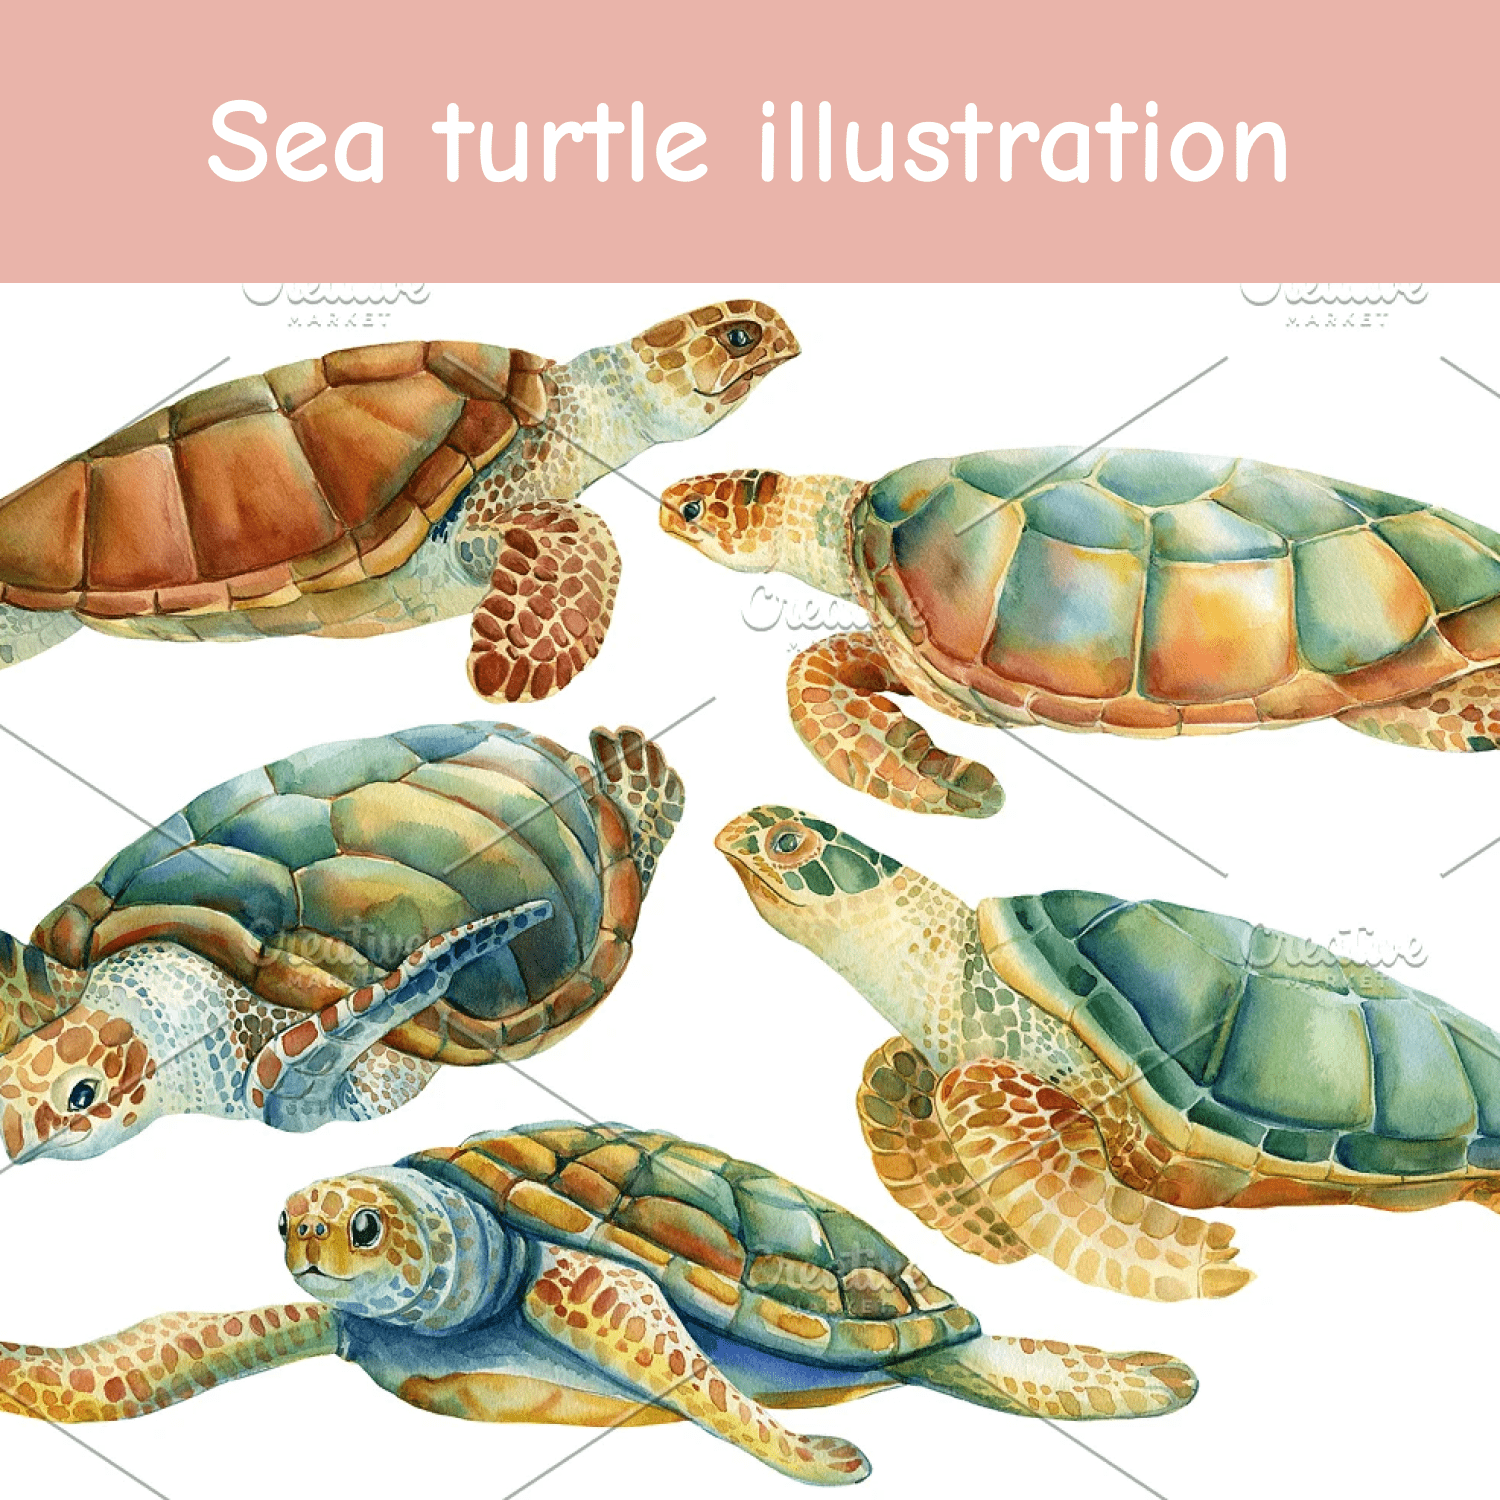 Sea turtle illustration cover.